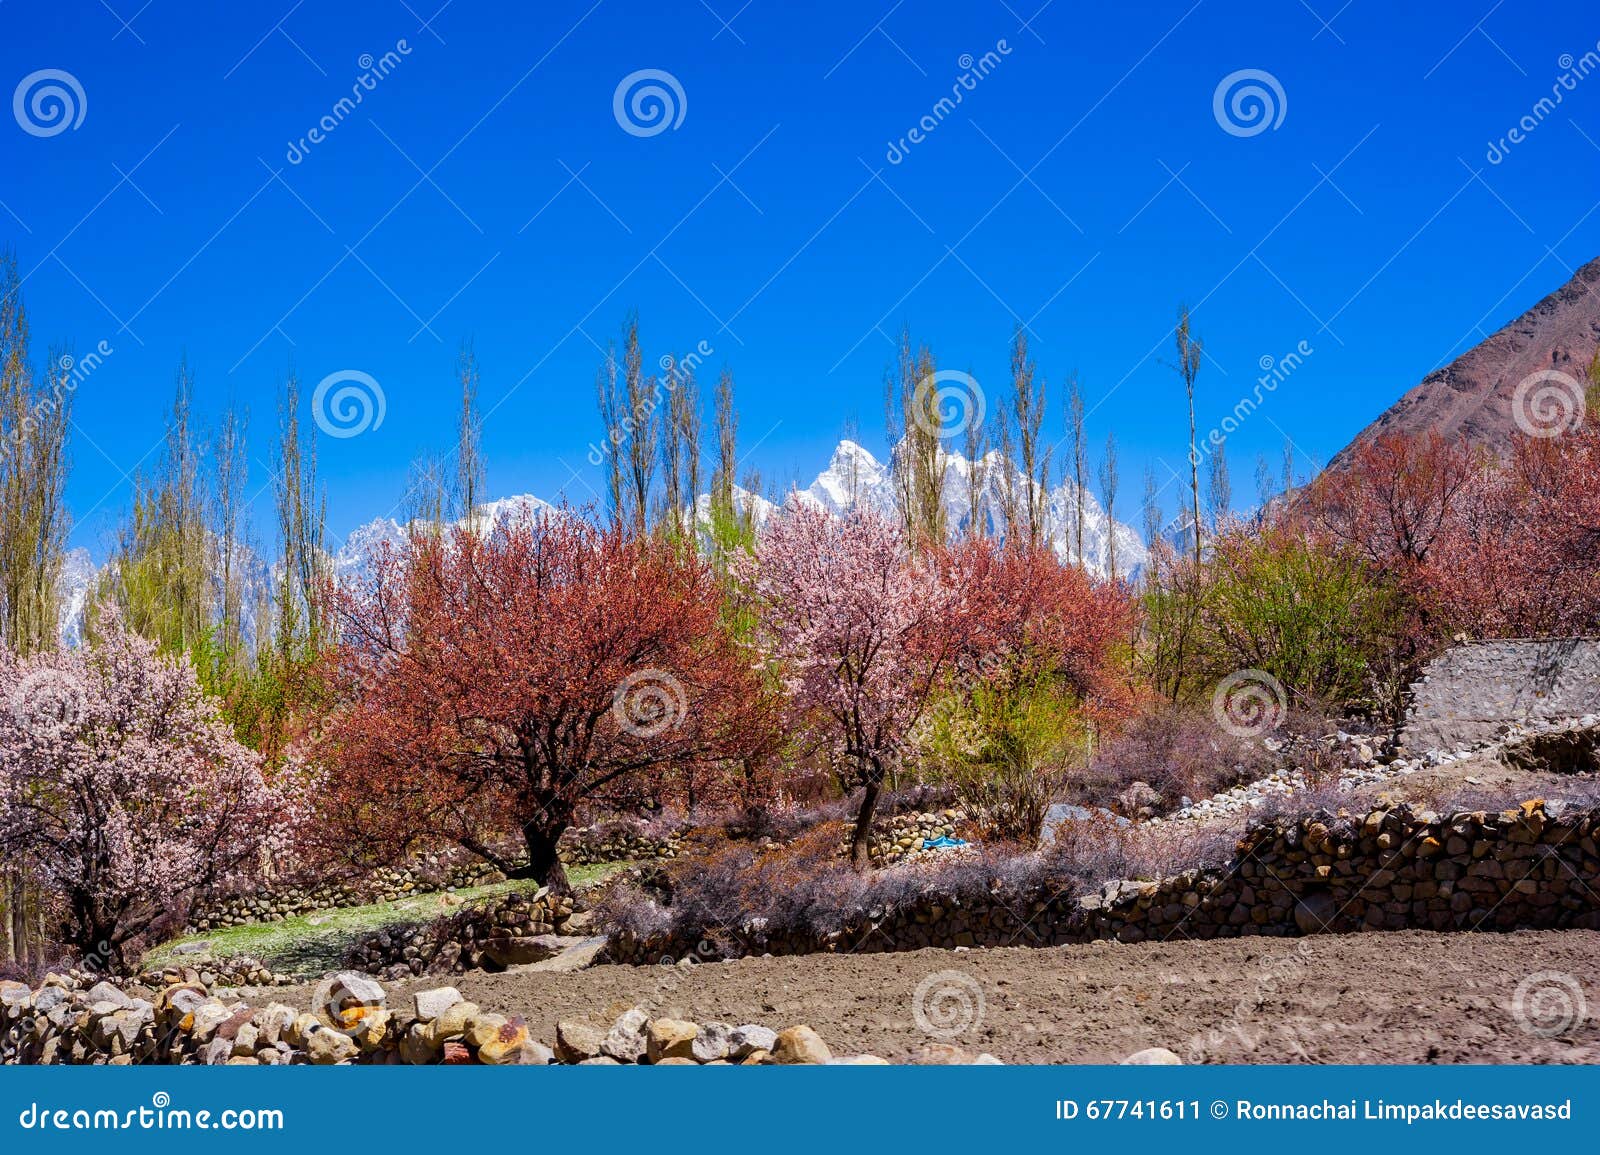 beautiful-landscape-hunza-valley-spring-season-northern-area-pakistan-67741611.jpg